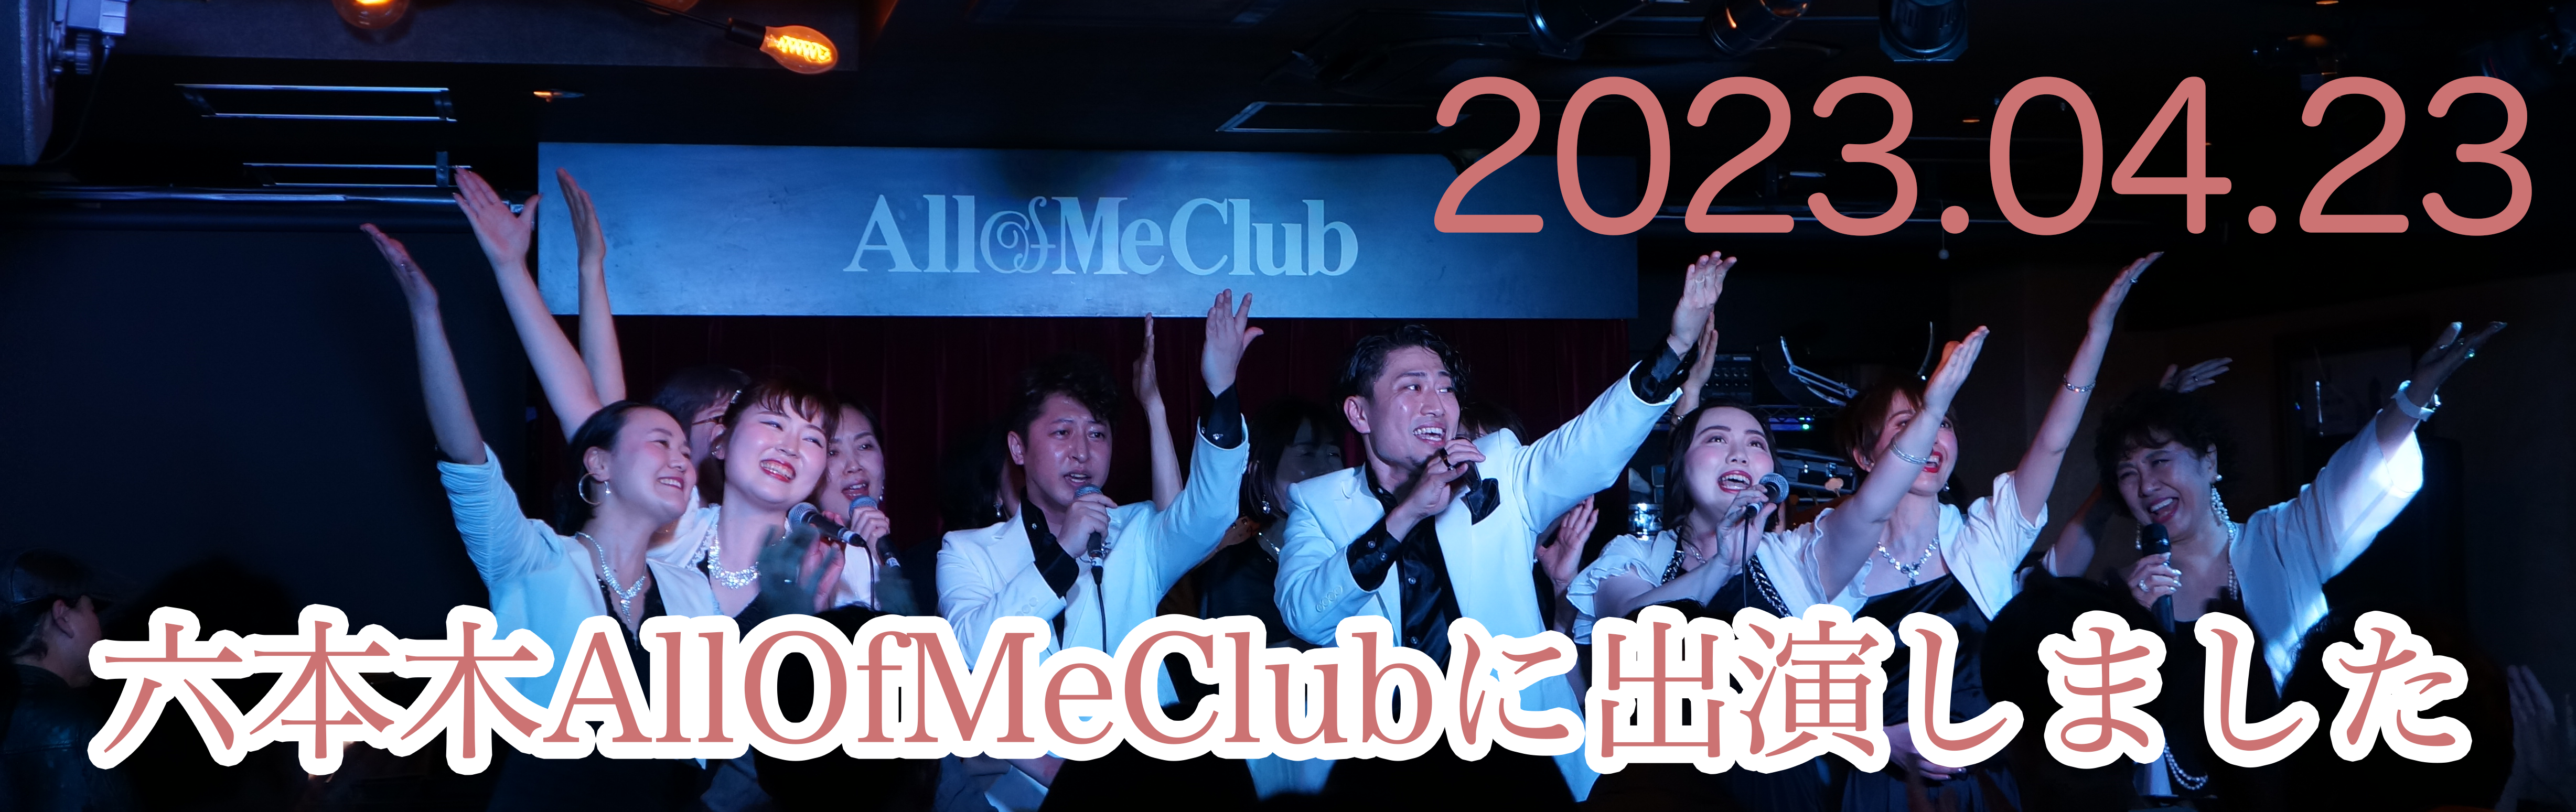 2023.04.23 AllOfMeClub出演